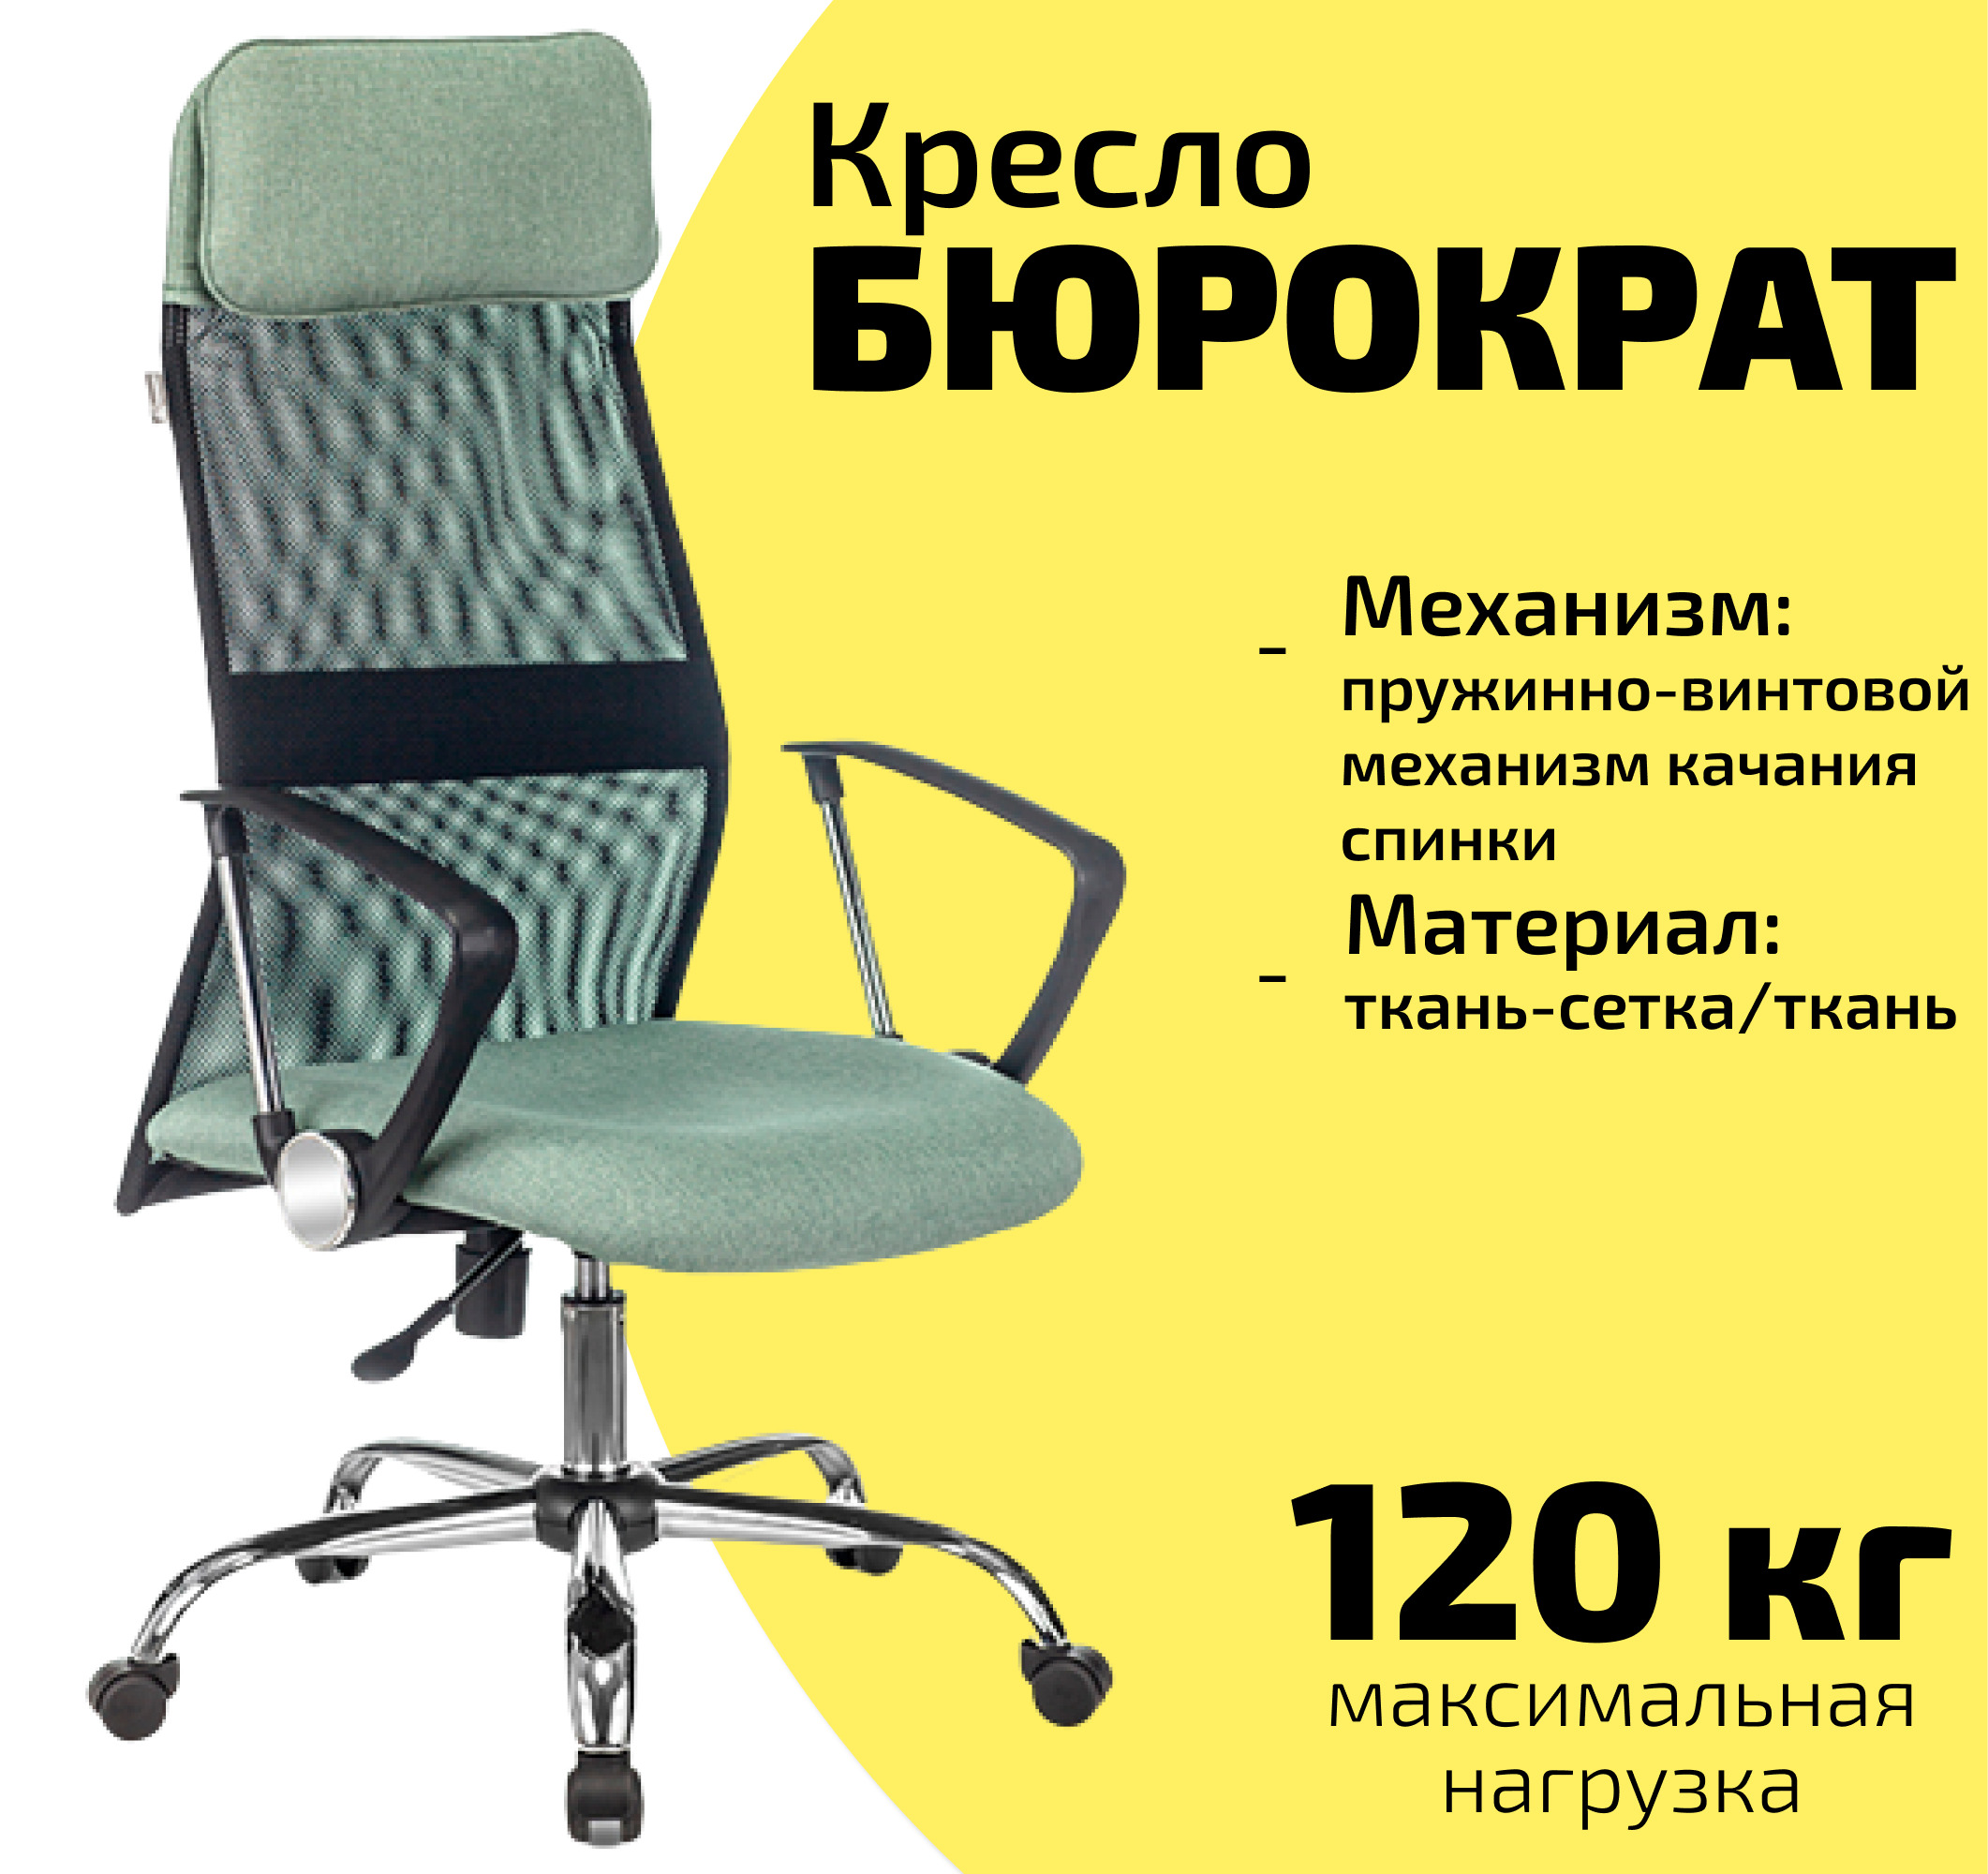 Кресло бюрократ kb 8n